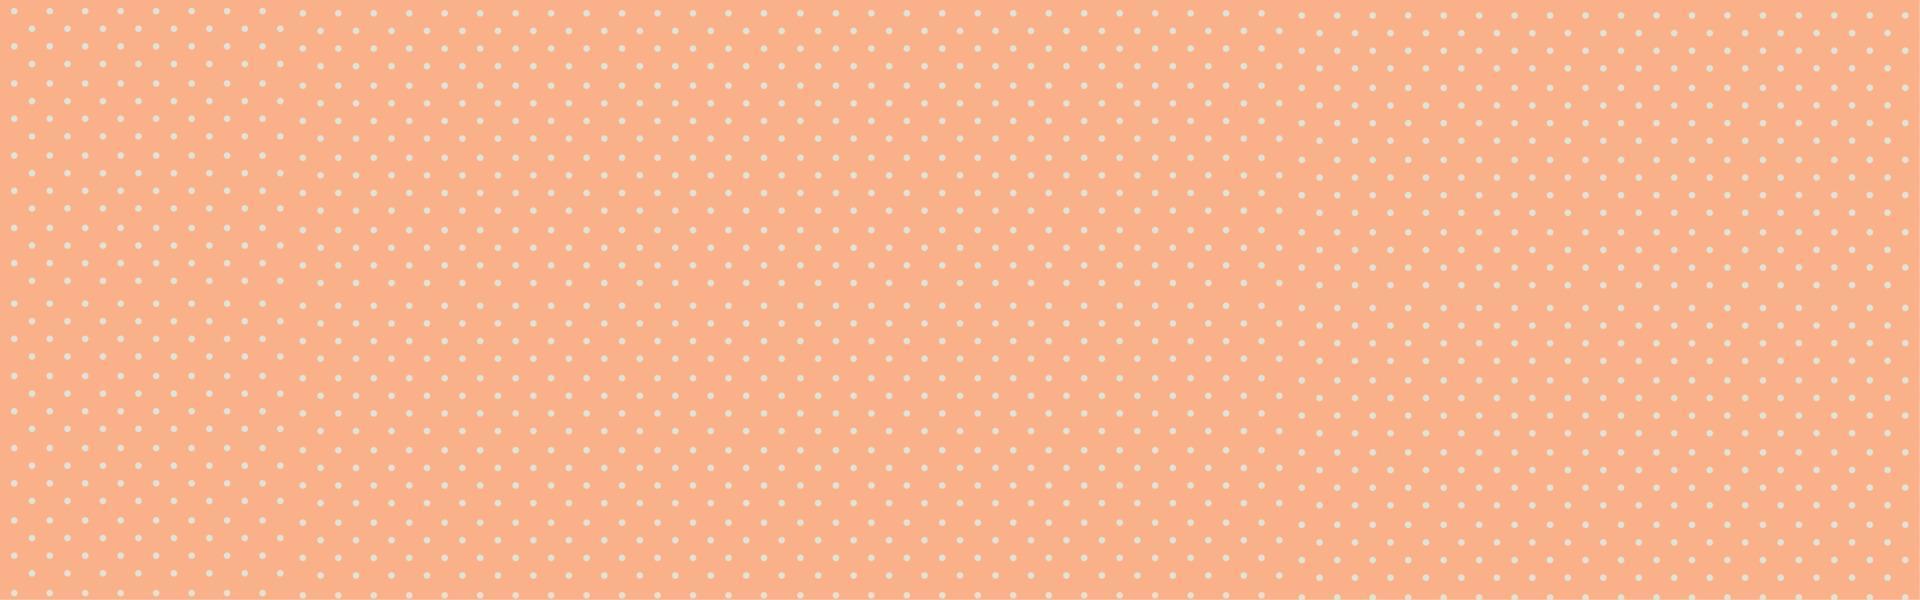 seamless Polka dot background vector